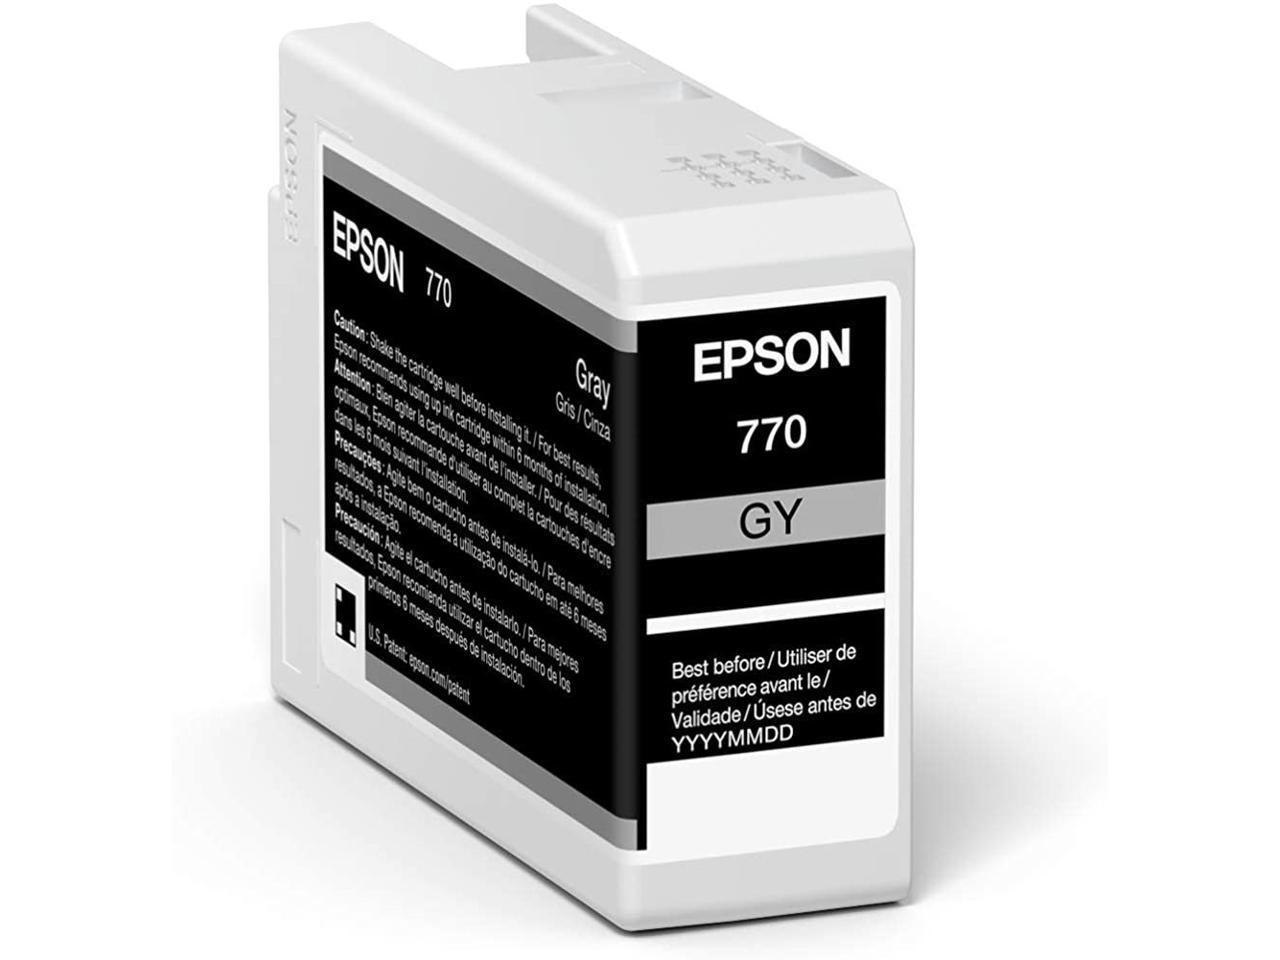 Epson UltraChrome PRO 770 Original Inkjet Ink Cartridge - Gray Pack